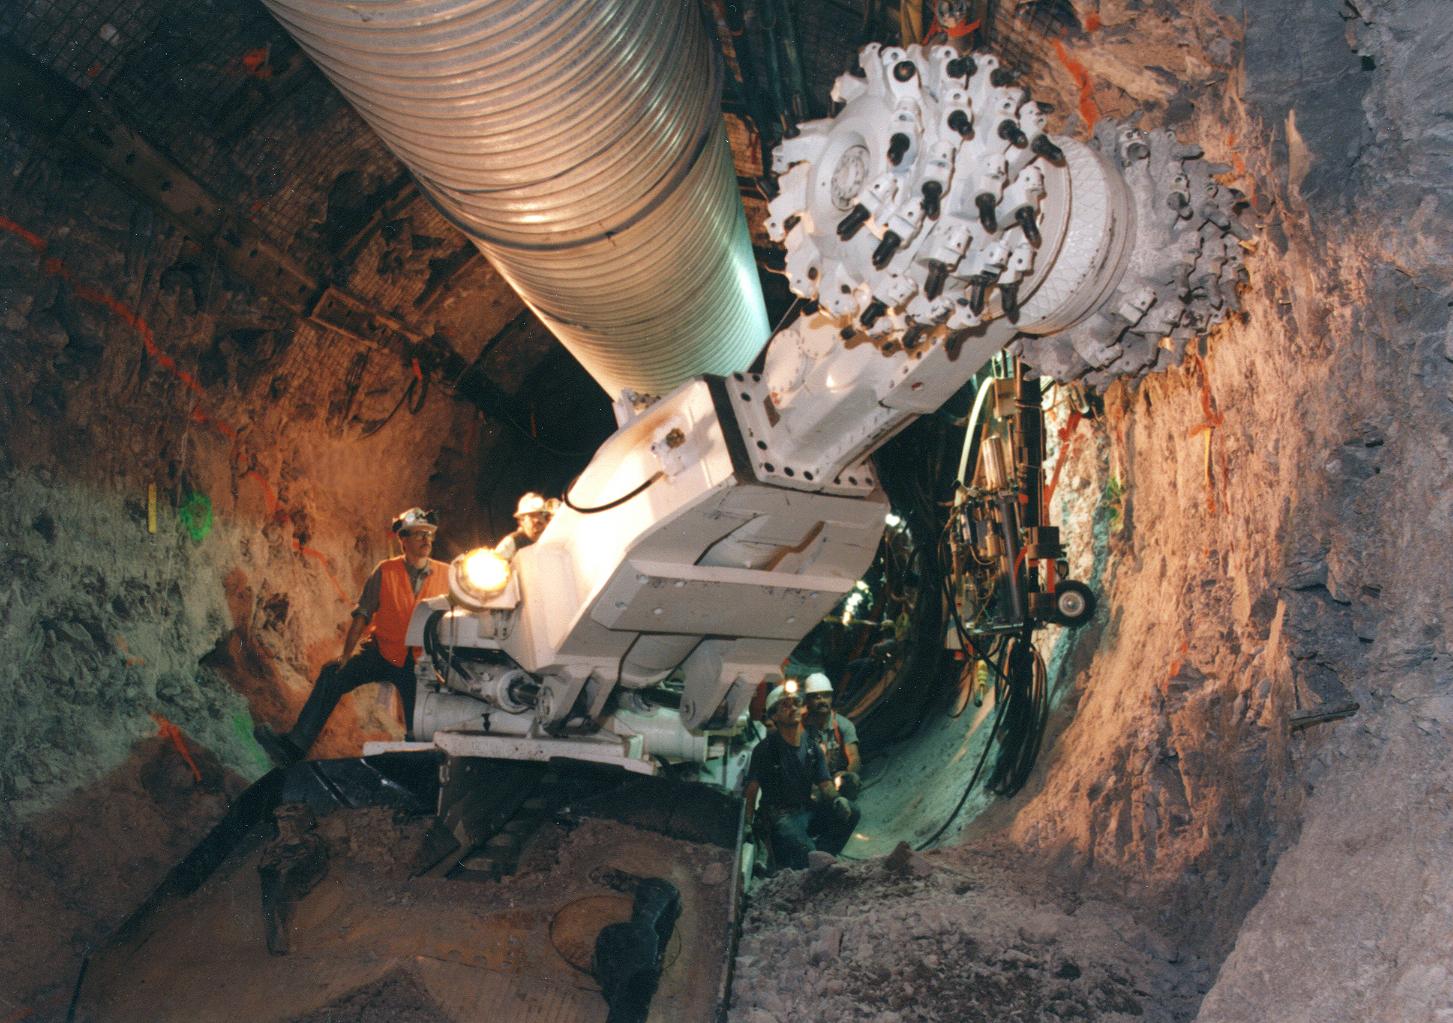 Underground excavation at Yucca Mountain for scientific testing